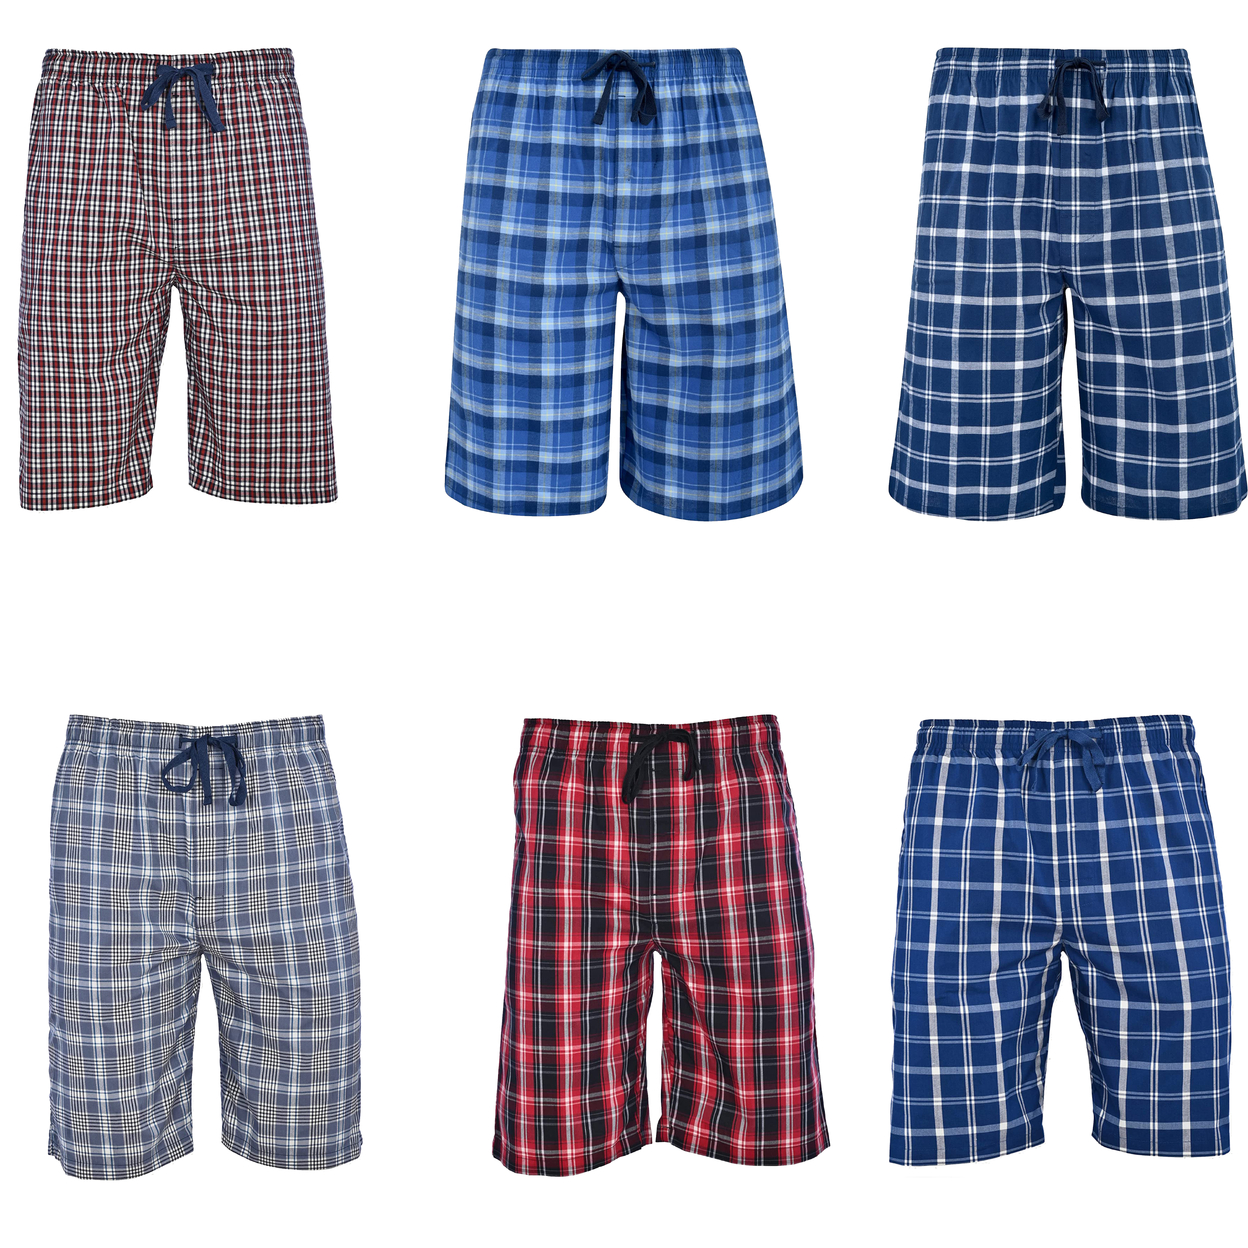 Men's Ultra-Soft Plaid Lounge Pajama Sleep Wear Shorts - Black, Small